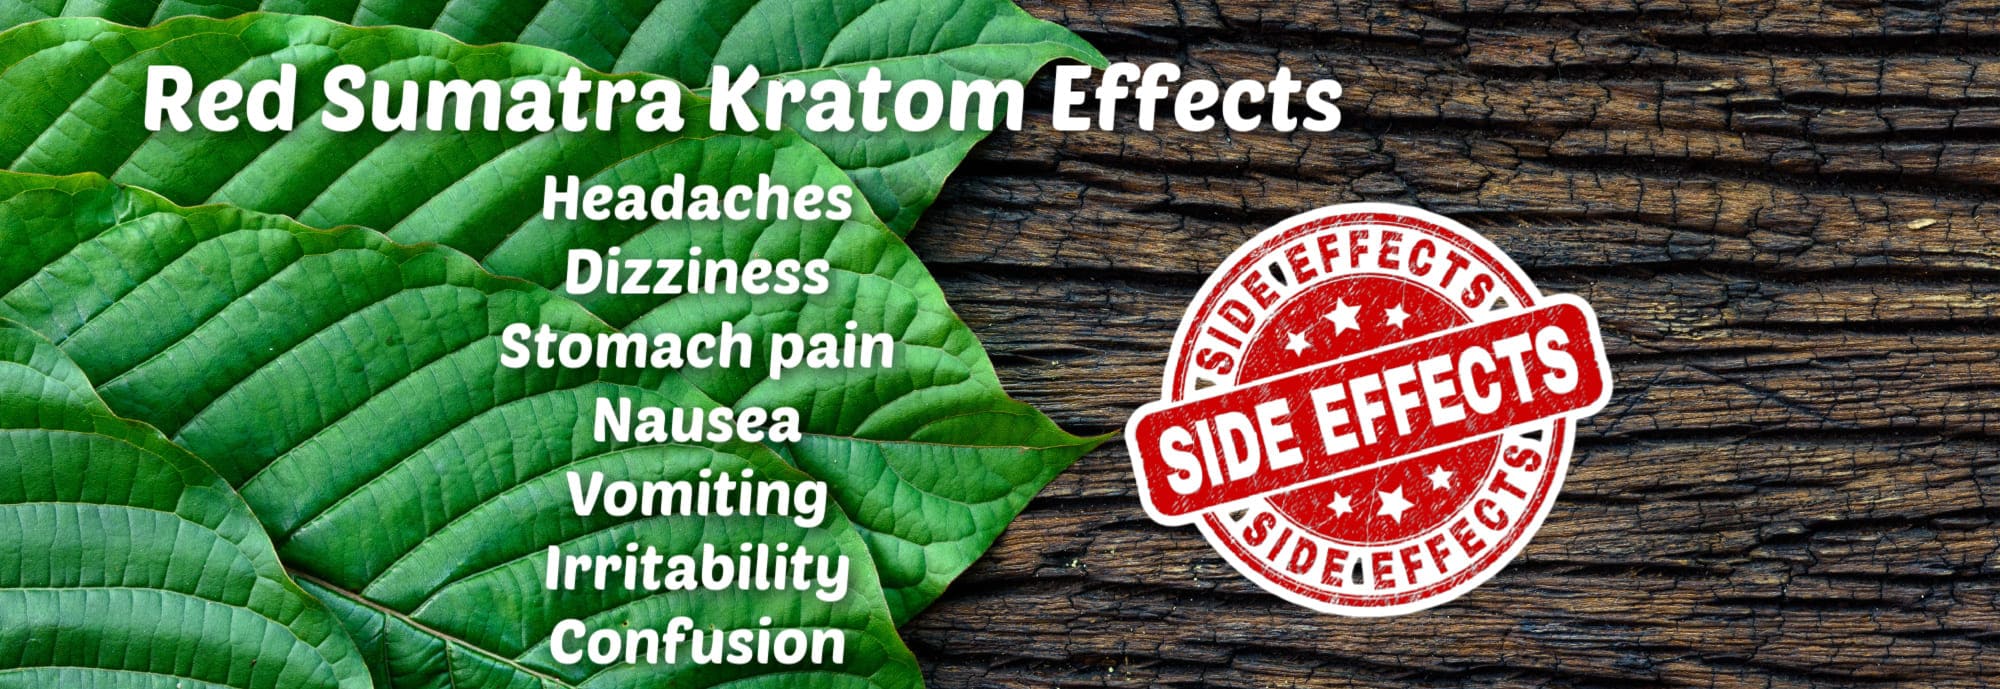 image of effects of red sumatra kratom